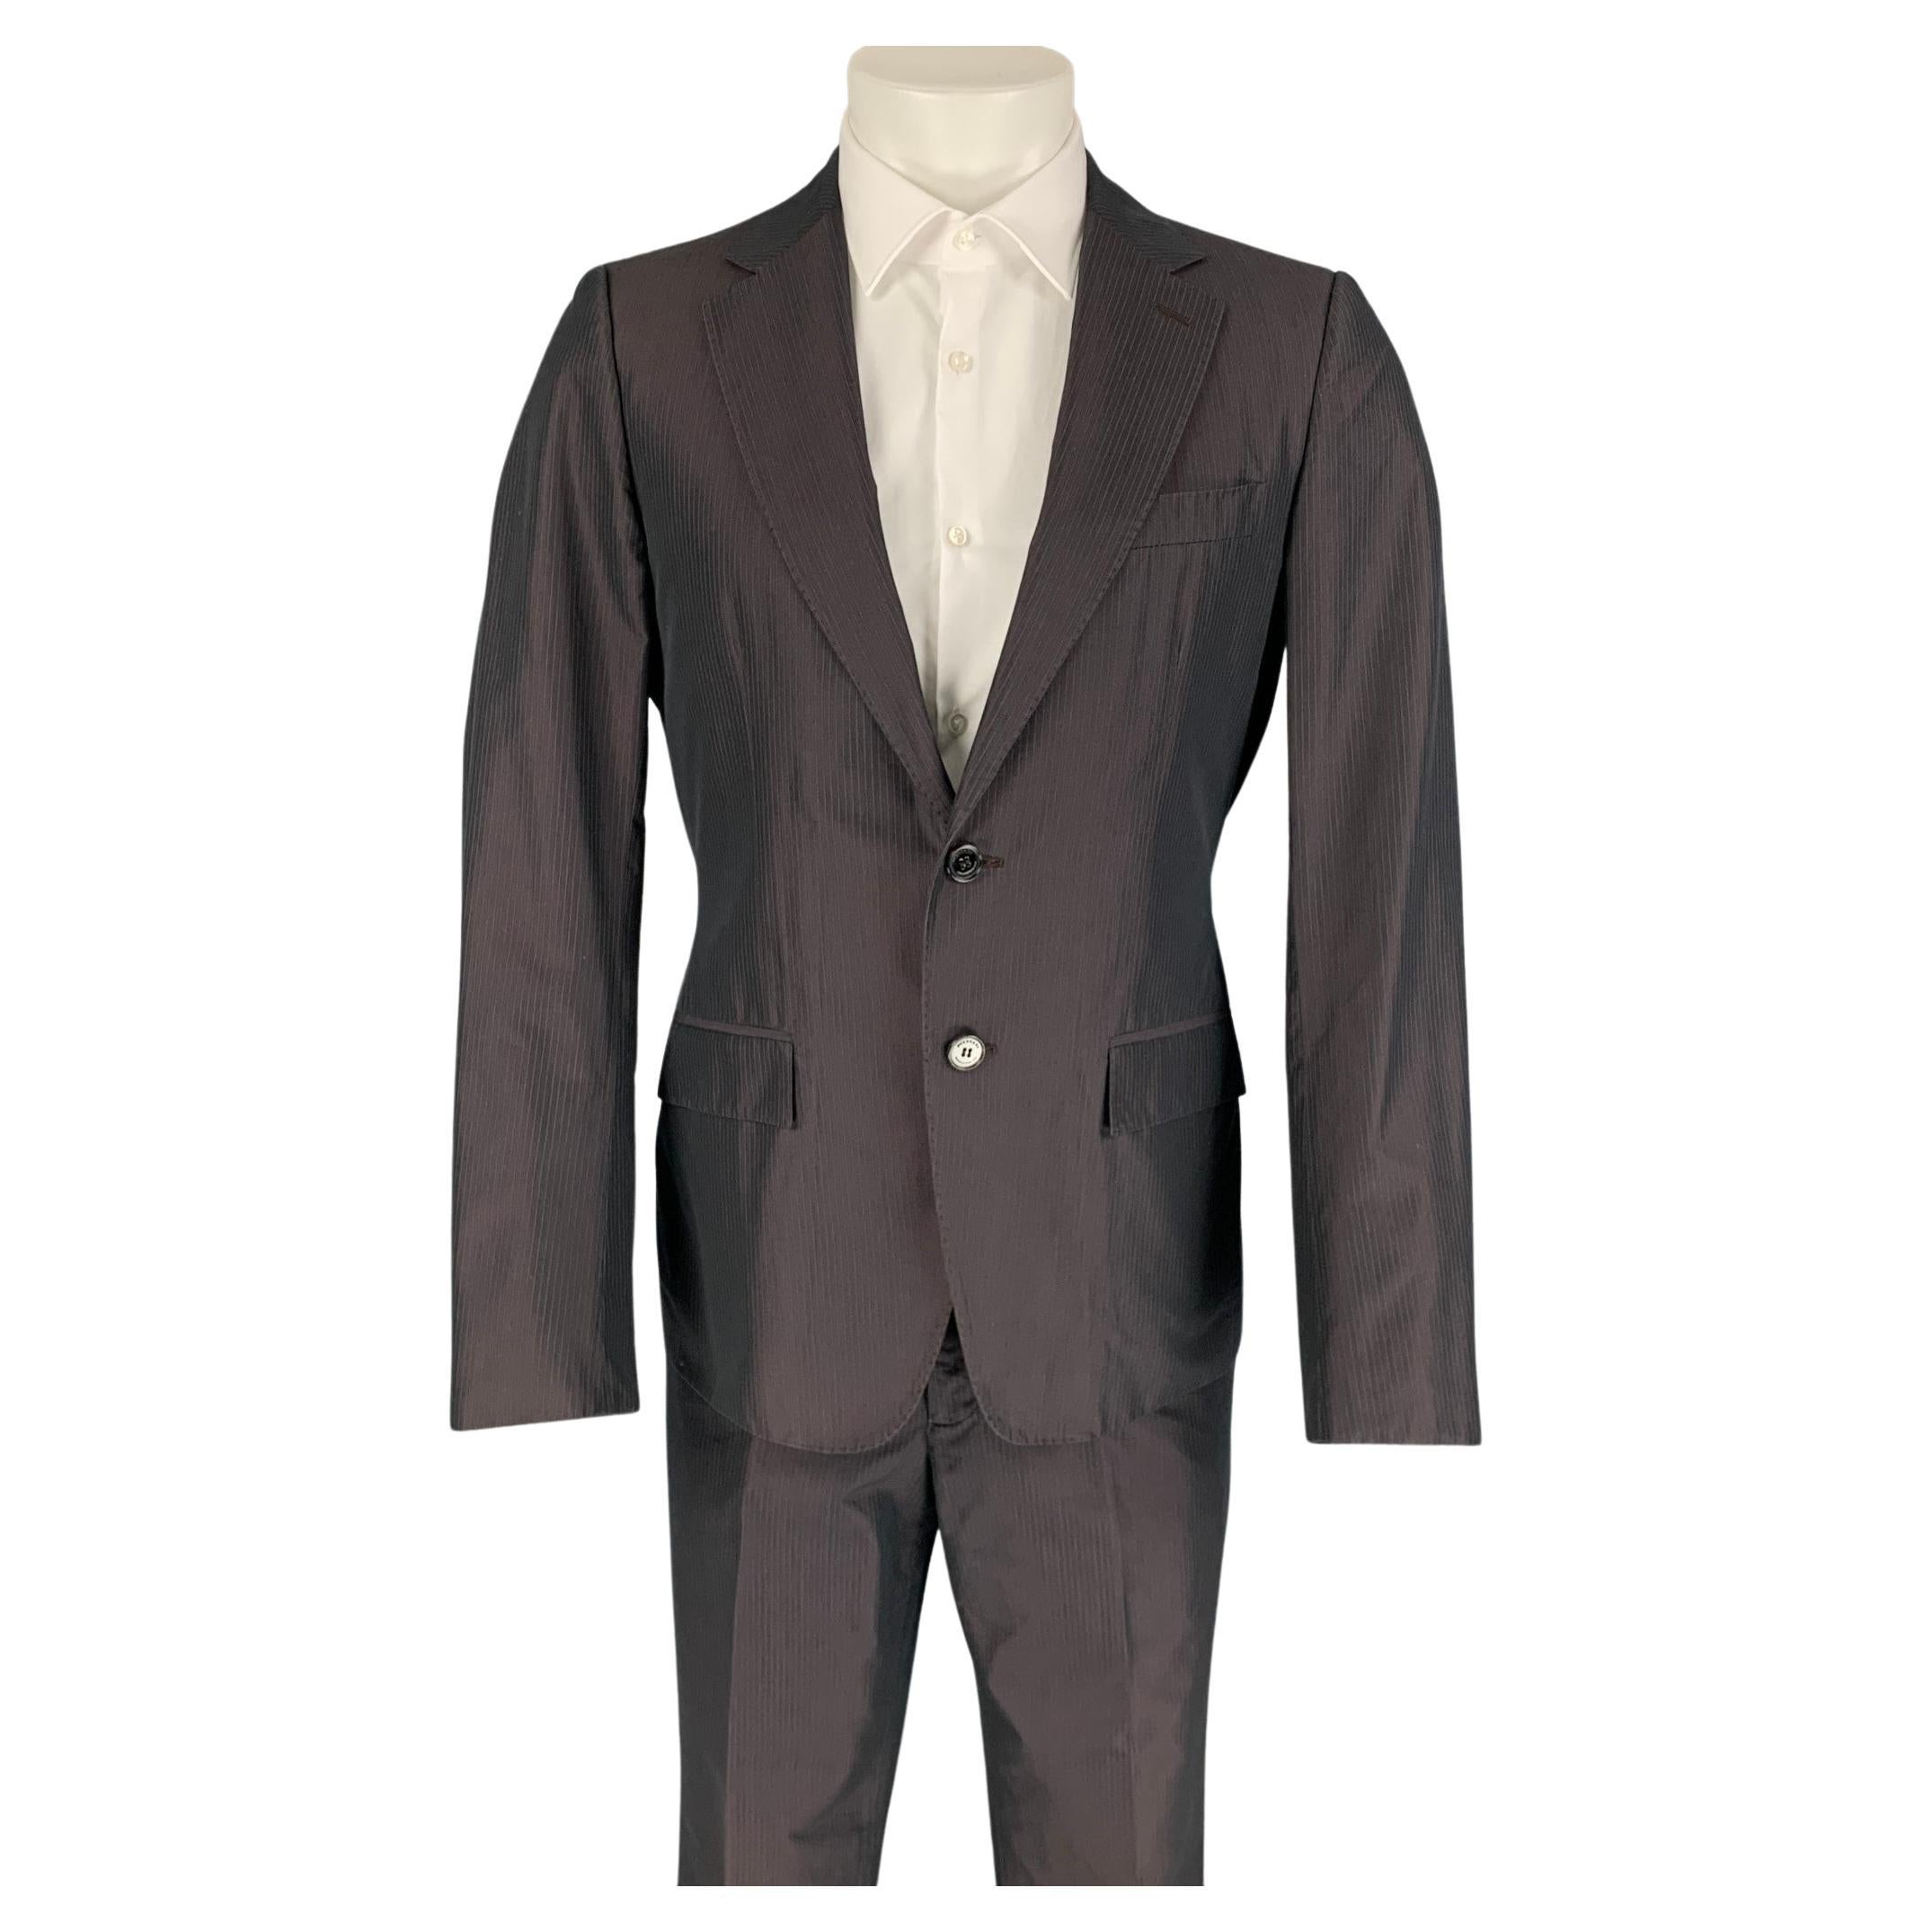 BURBERRY PRORSUM Spring 2008 Size 38 Regular Plum Stripe Cotton / Silk Suit